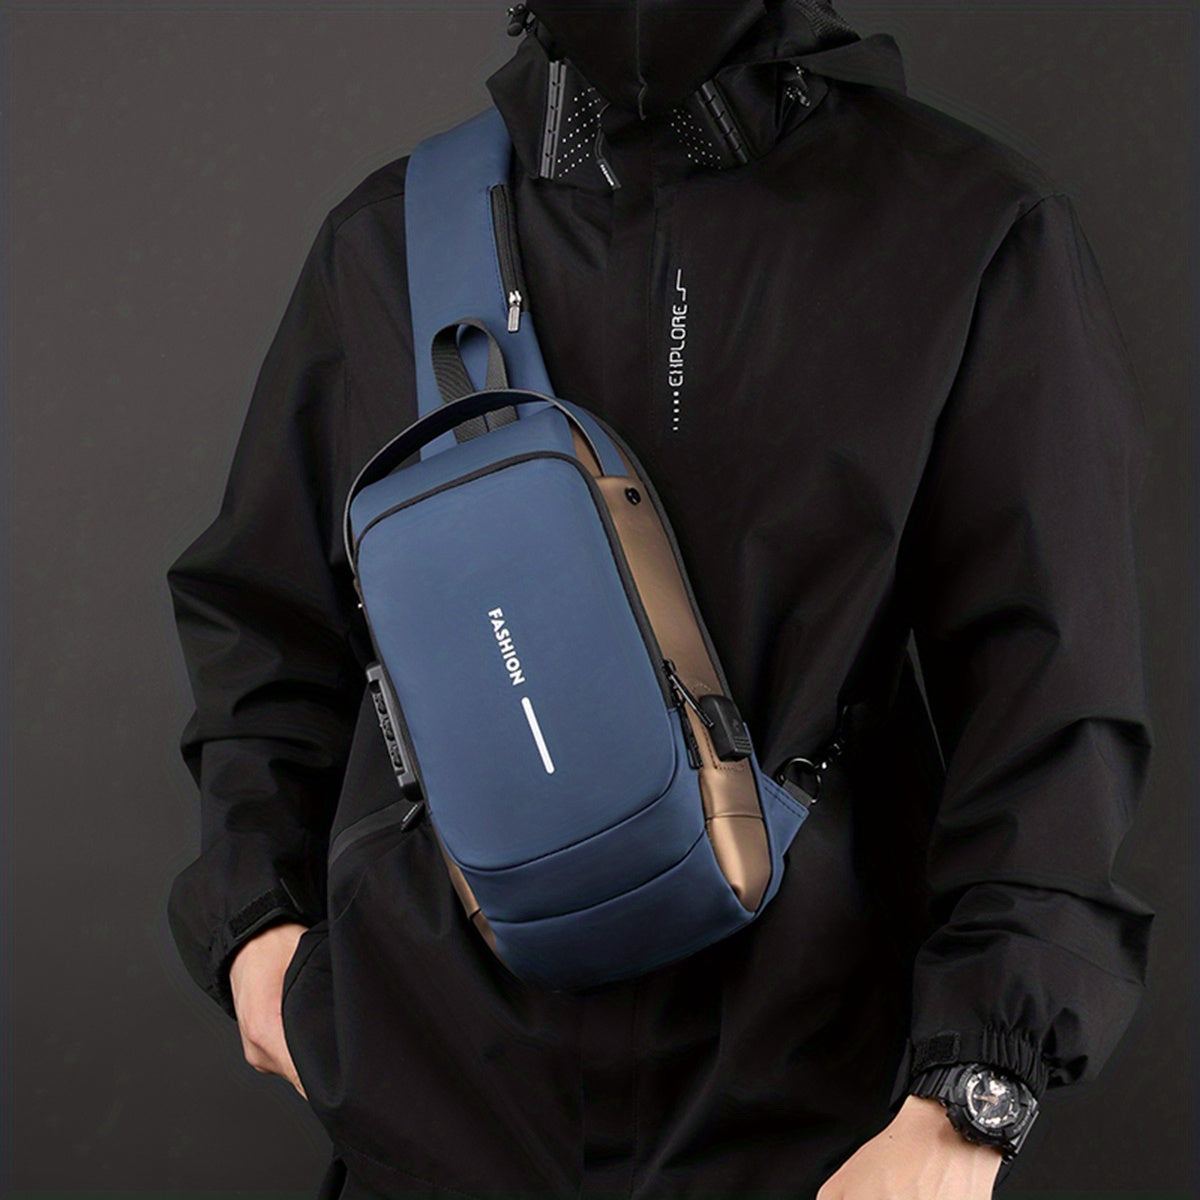 Buy 1 Get 1 Free | Anti-theft USB Shoulder Bag | Cross Body Chest Bag